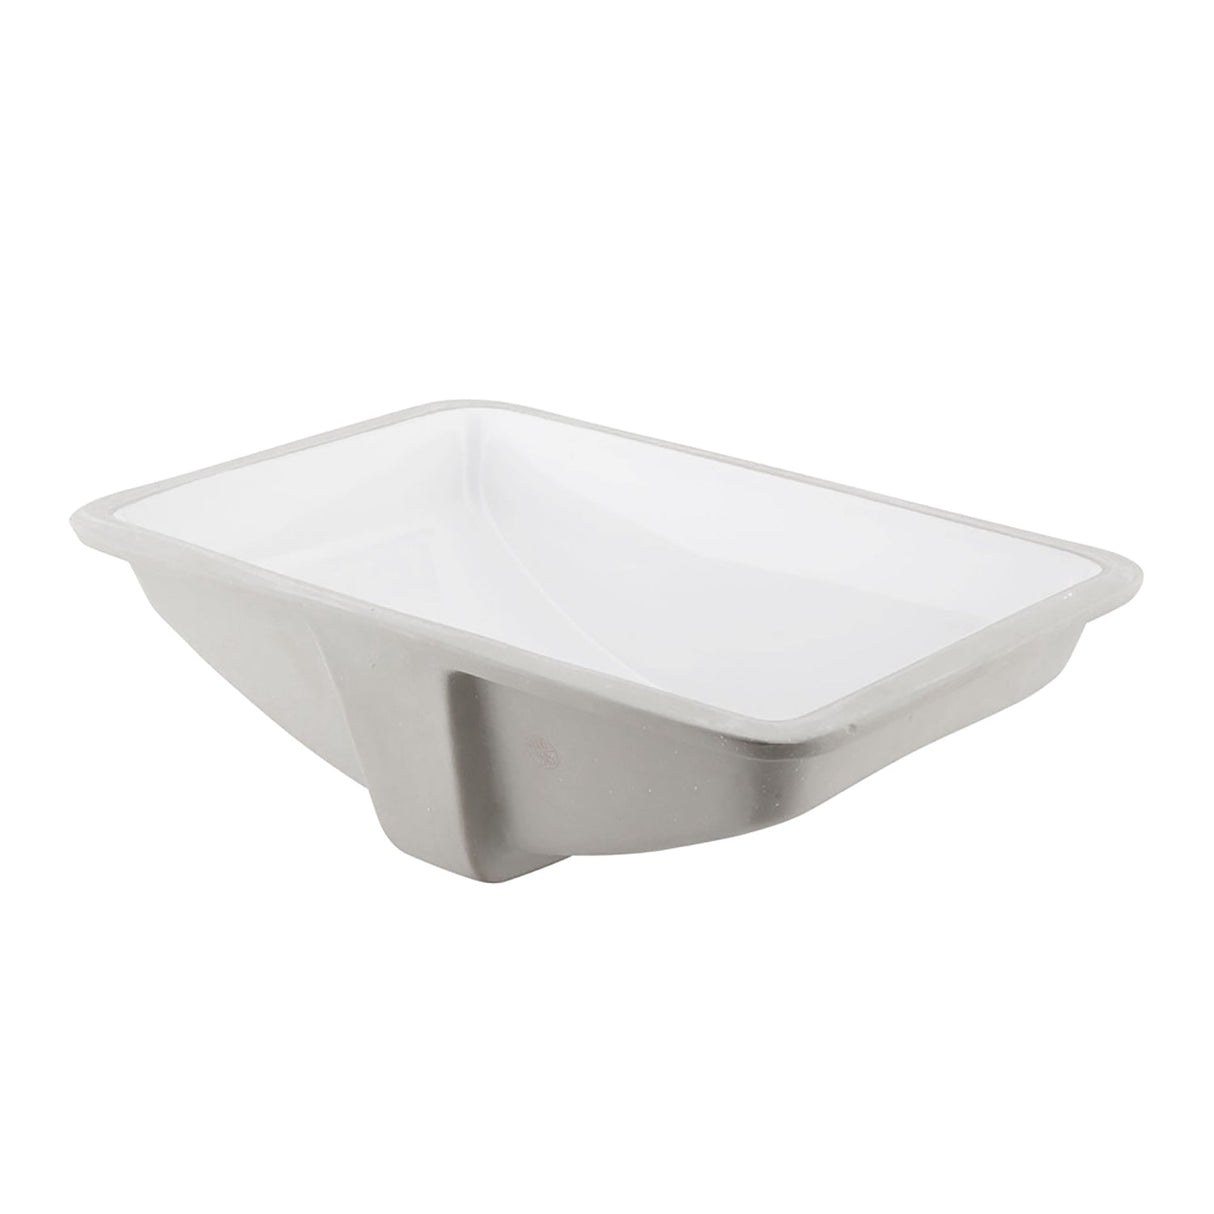 DAX Ceramic Square Single Bowl Undermount Bathroom Basin, White BSN-202G-W